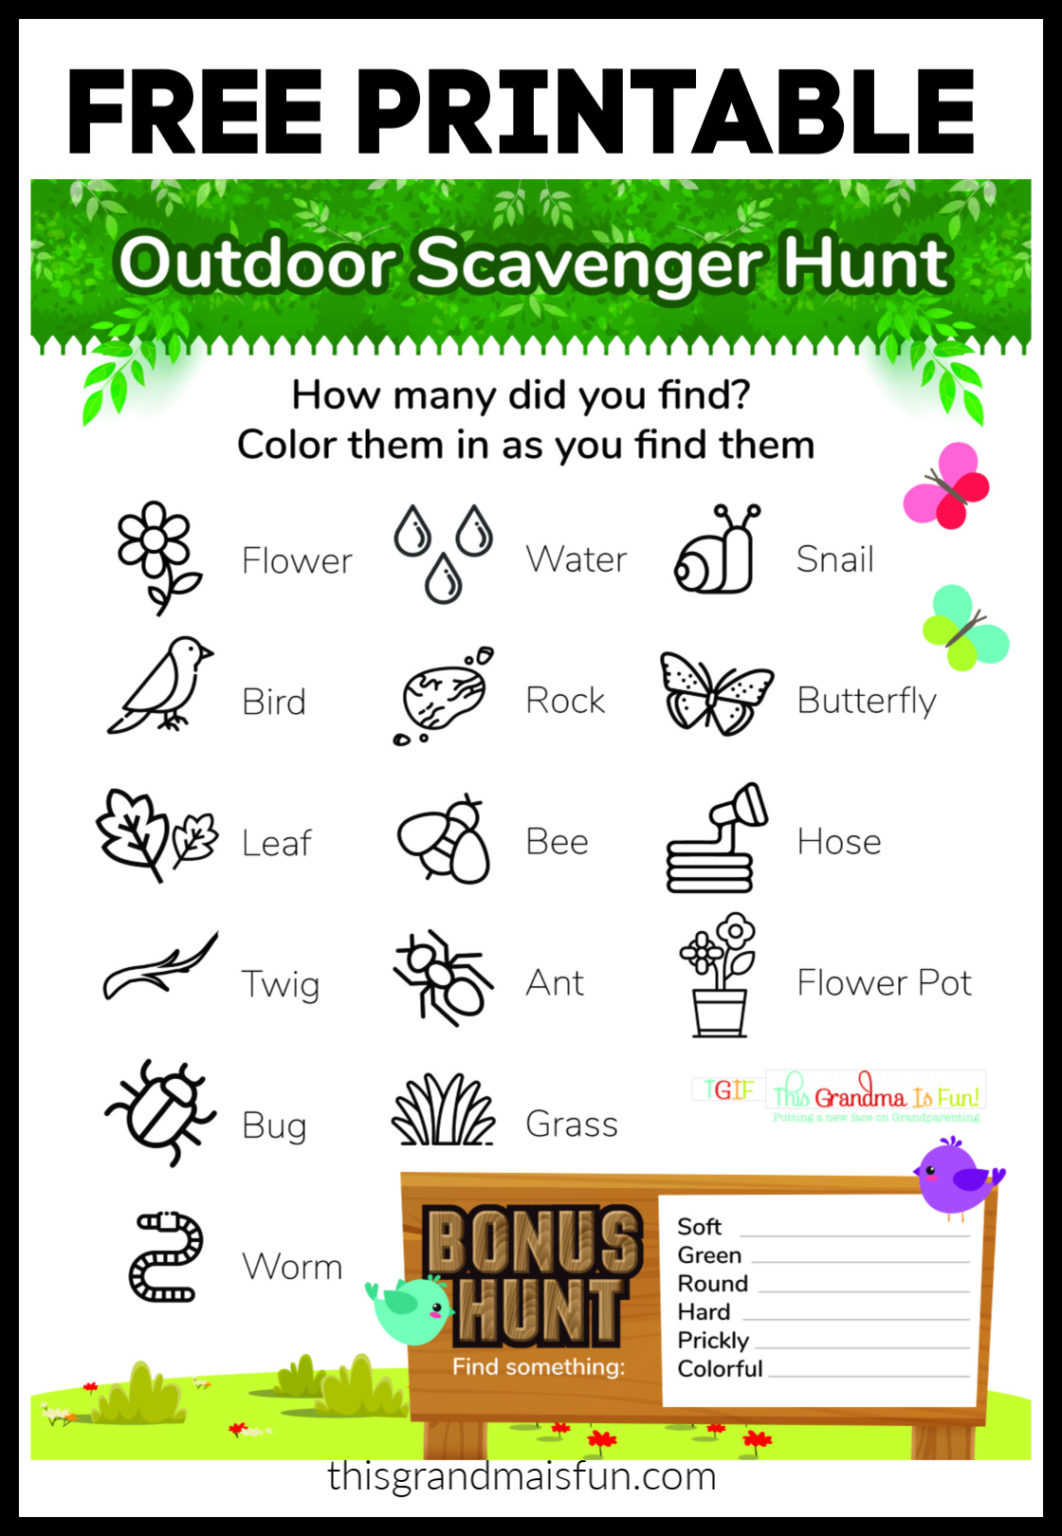 outdoor-scavenger-hunt-free-printable-tgif-this-grandma-is-fun